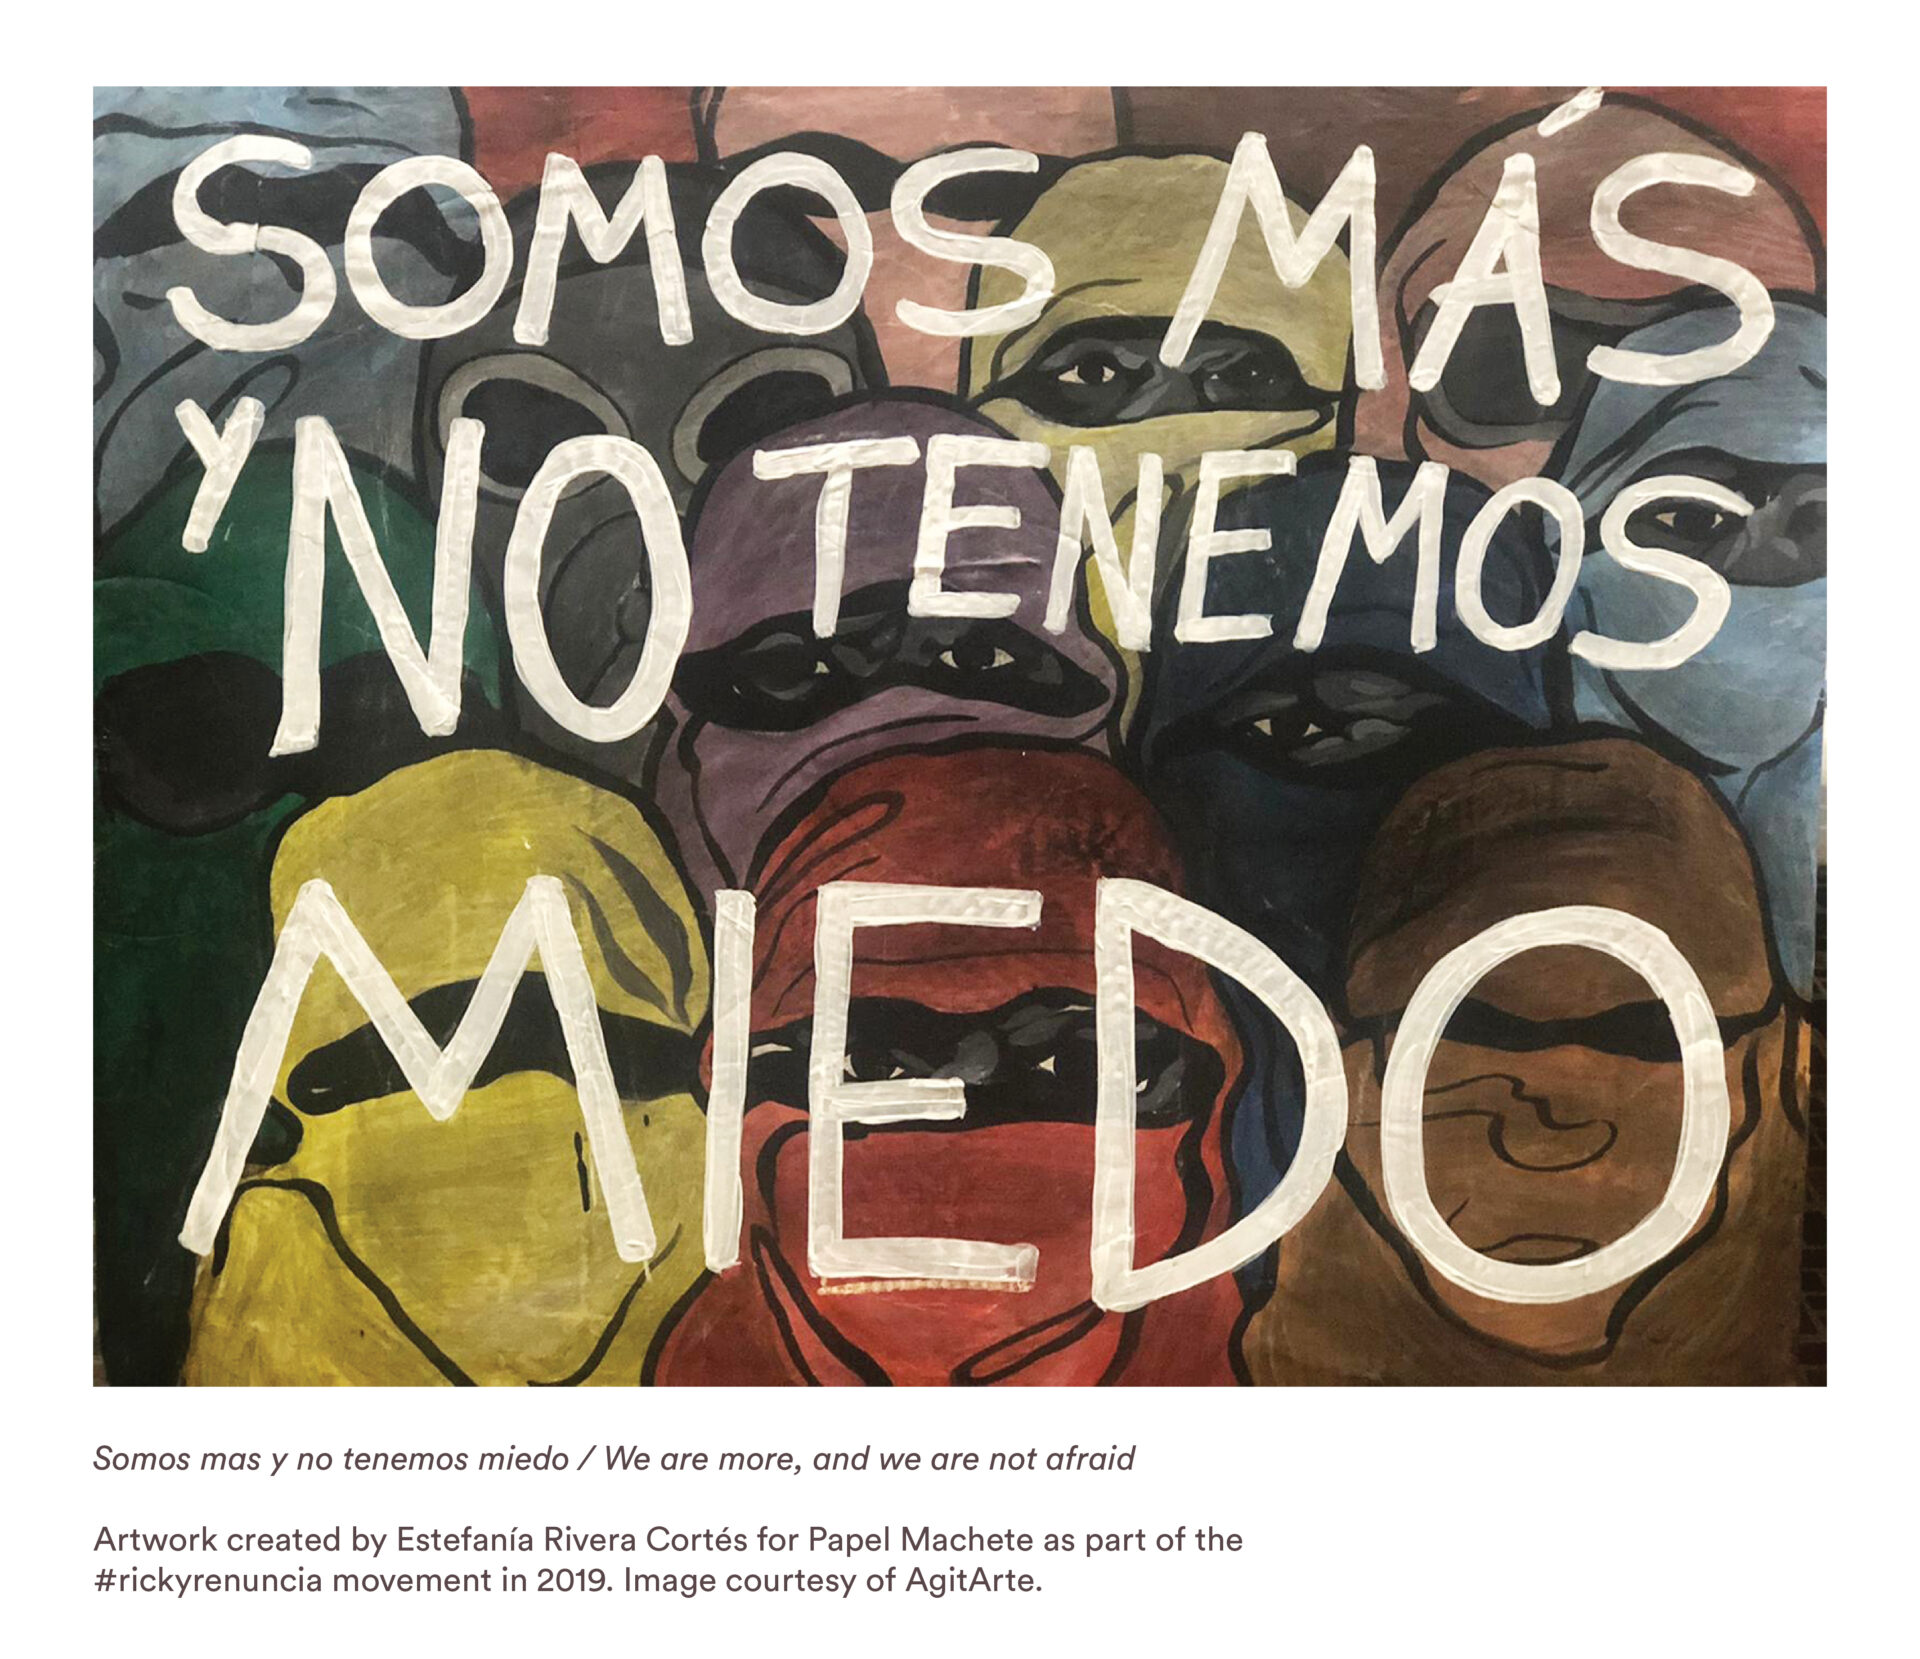 "Somos mas y no tenemos miedo / We are more, and we are not afraid" Artwork created by Estefanía Rivera Cortés for Papel Machete as part of the #rickyrenuncia movement in 2019. Image courtesy of AgitArte.